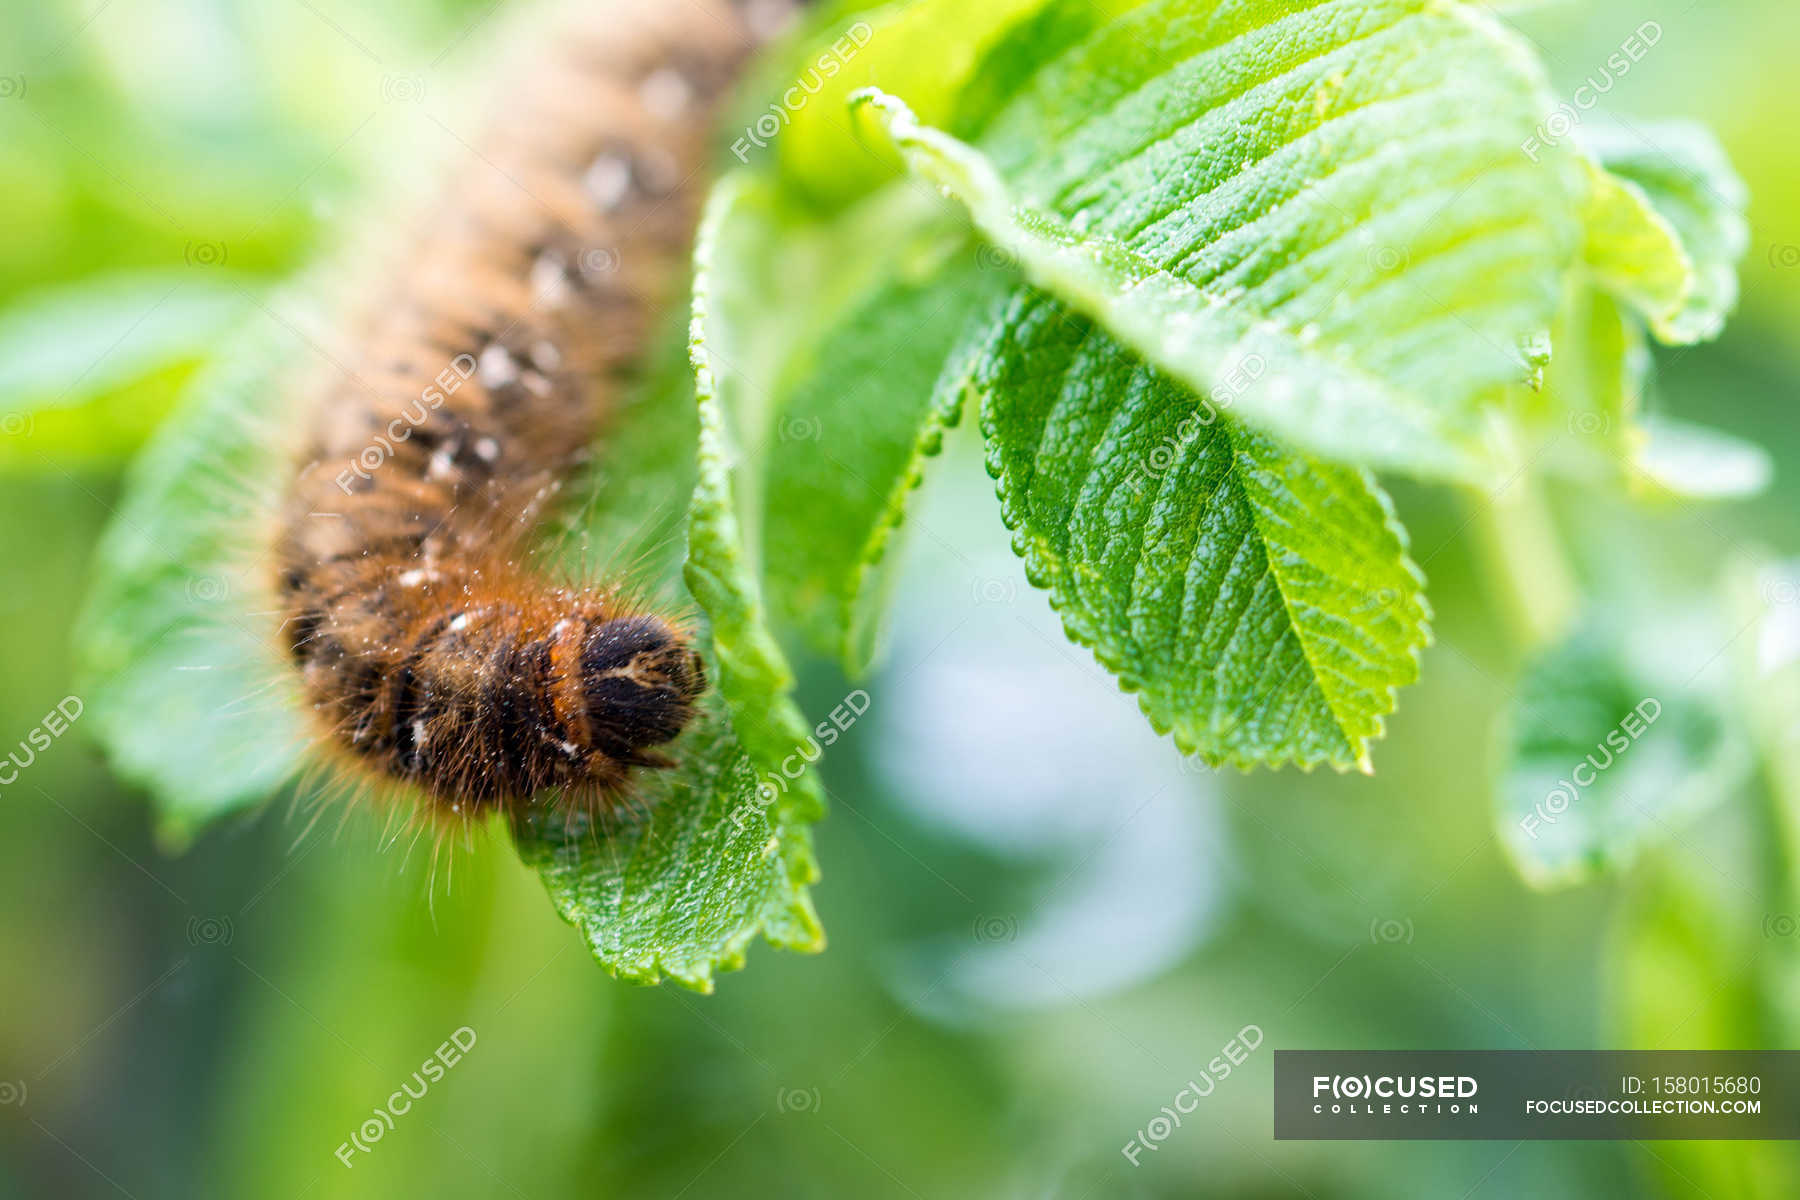 Crawling colorful caterpillar — Stock Photo | #158015680